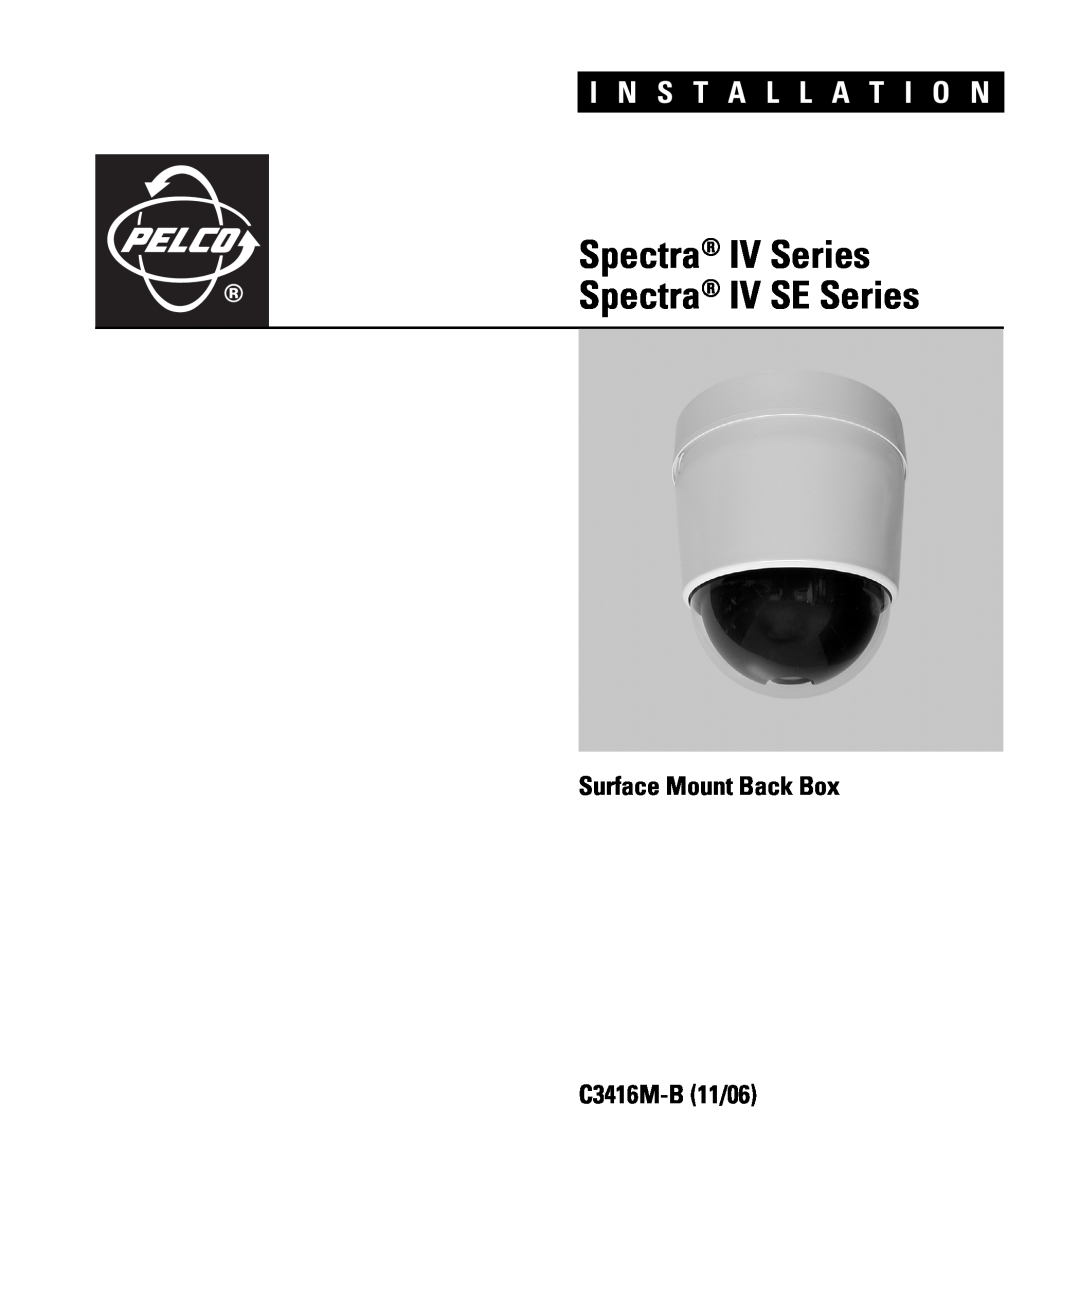 Pelco IV SE SERIES manual Spectra IV Series Spectra IV SE Series, I N S T A L L A T I O N, Surface Mount Back Box 